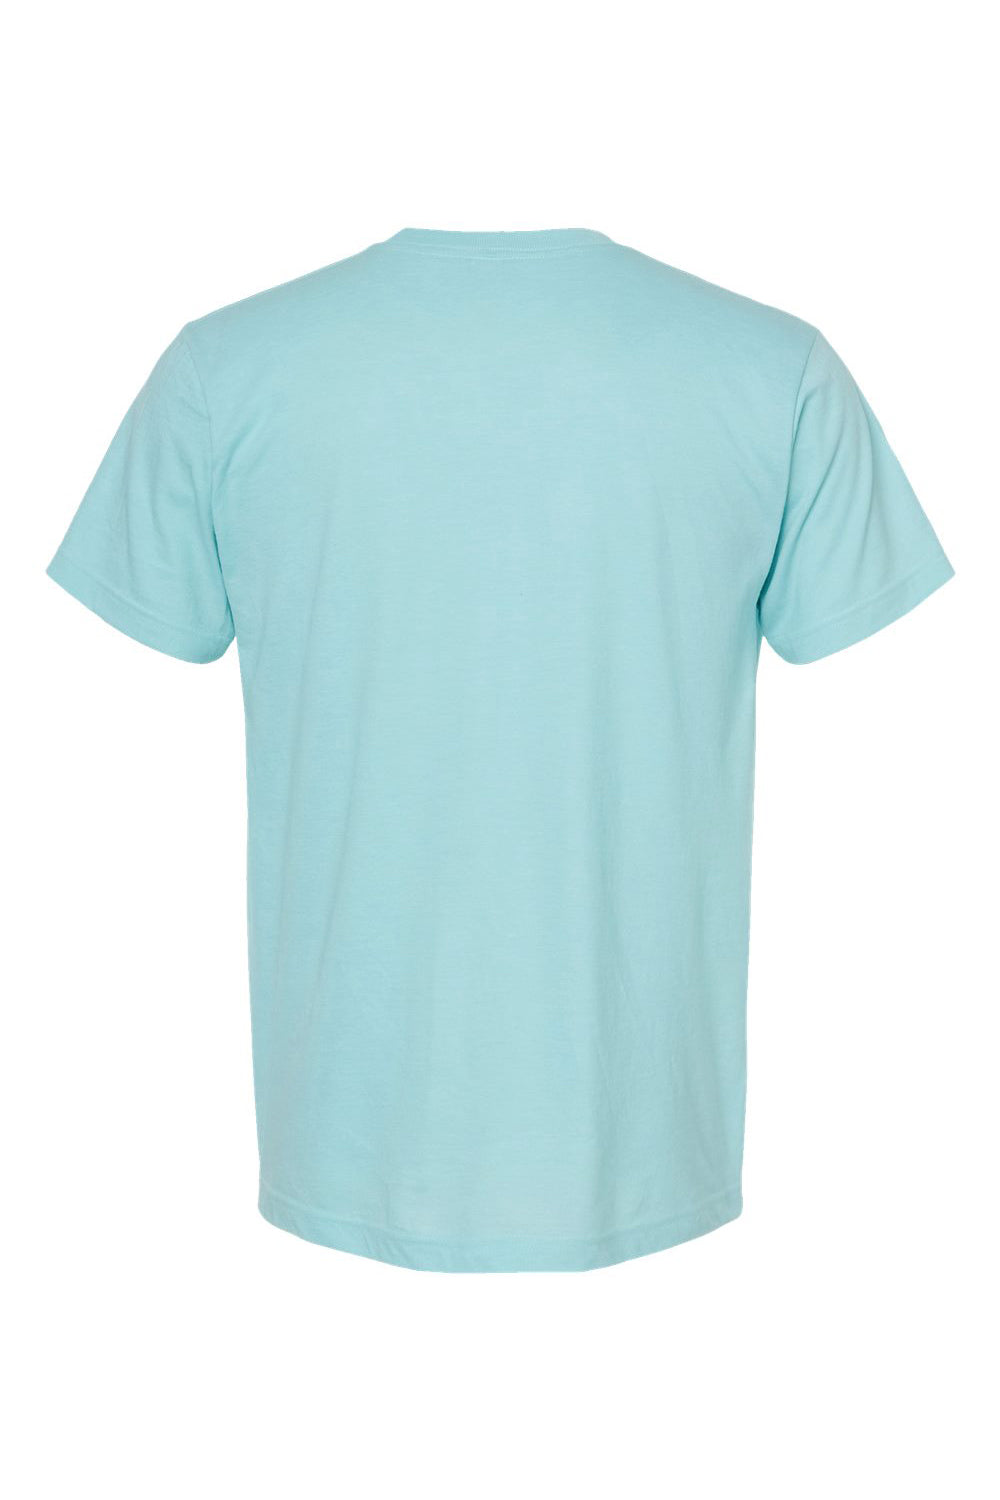 Tultex 202 Mens Fine Jersey Short Sleeve Crewneck T-Shirt Heather Purist Blue Flat Back